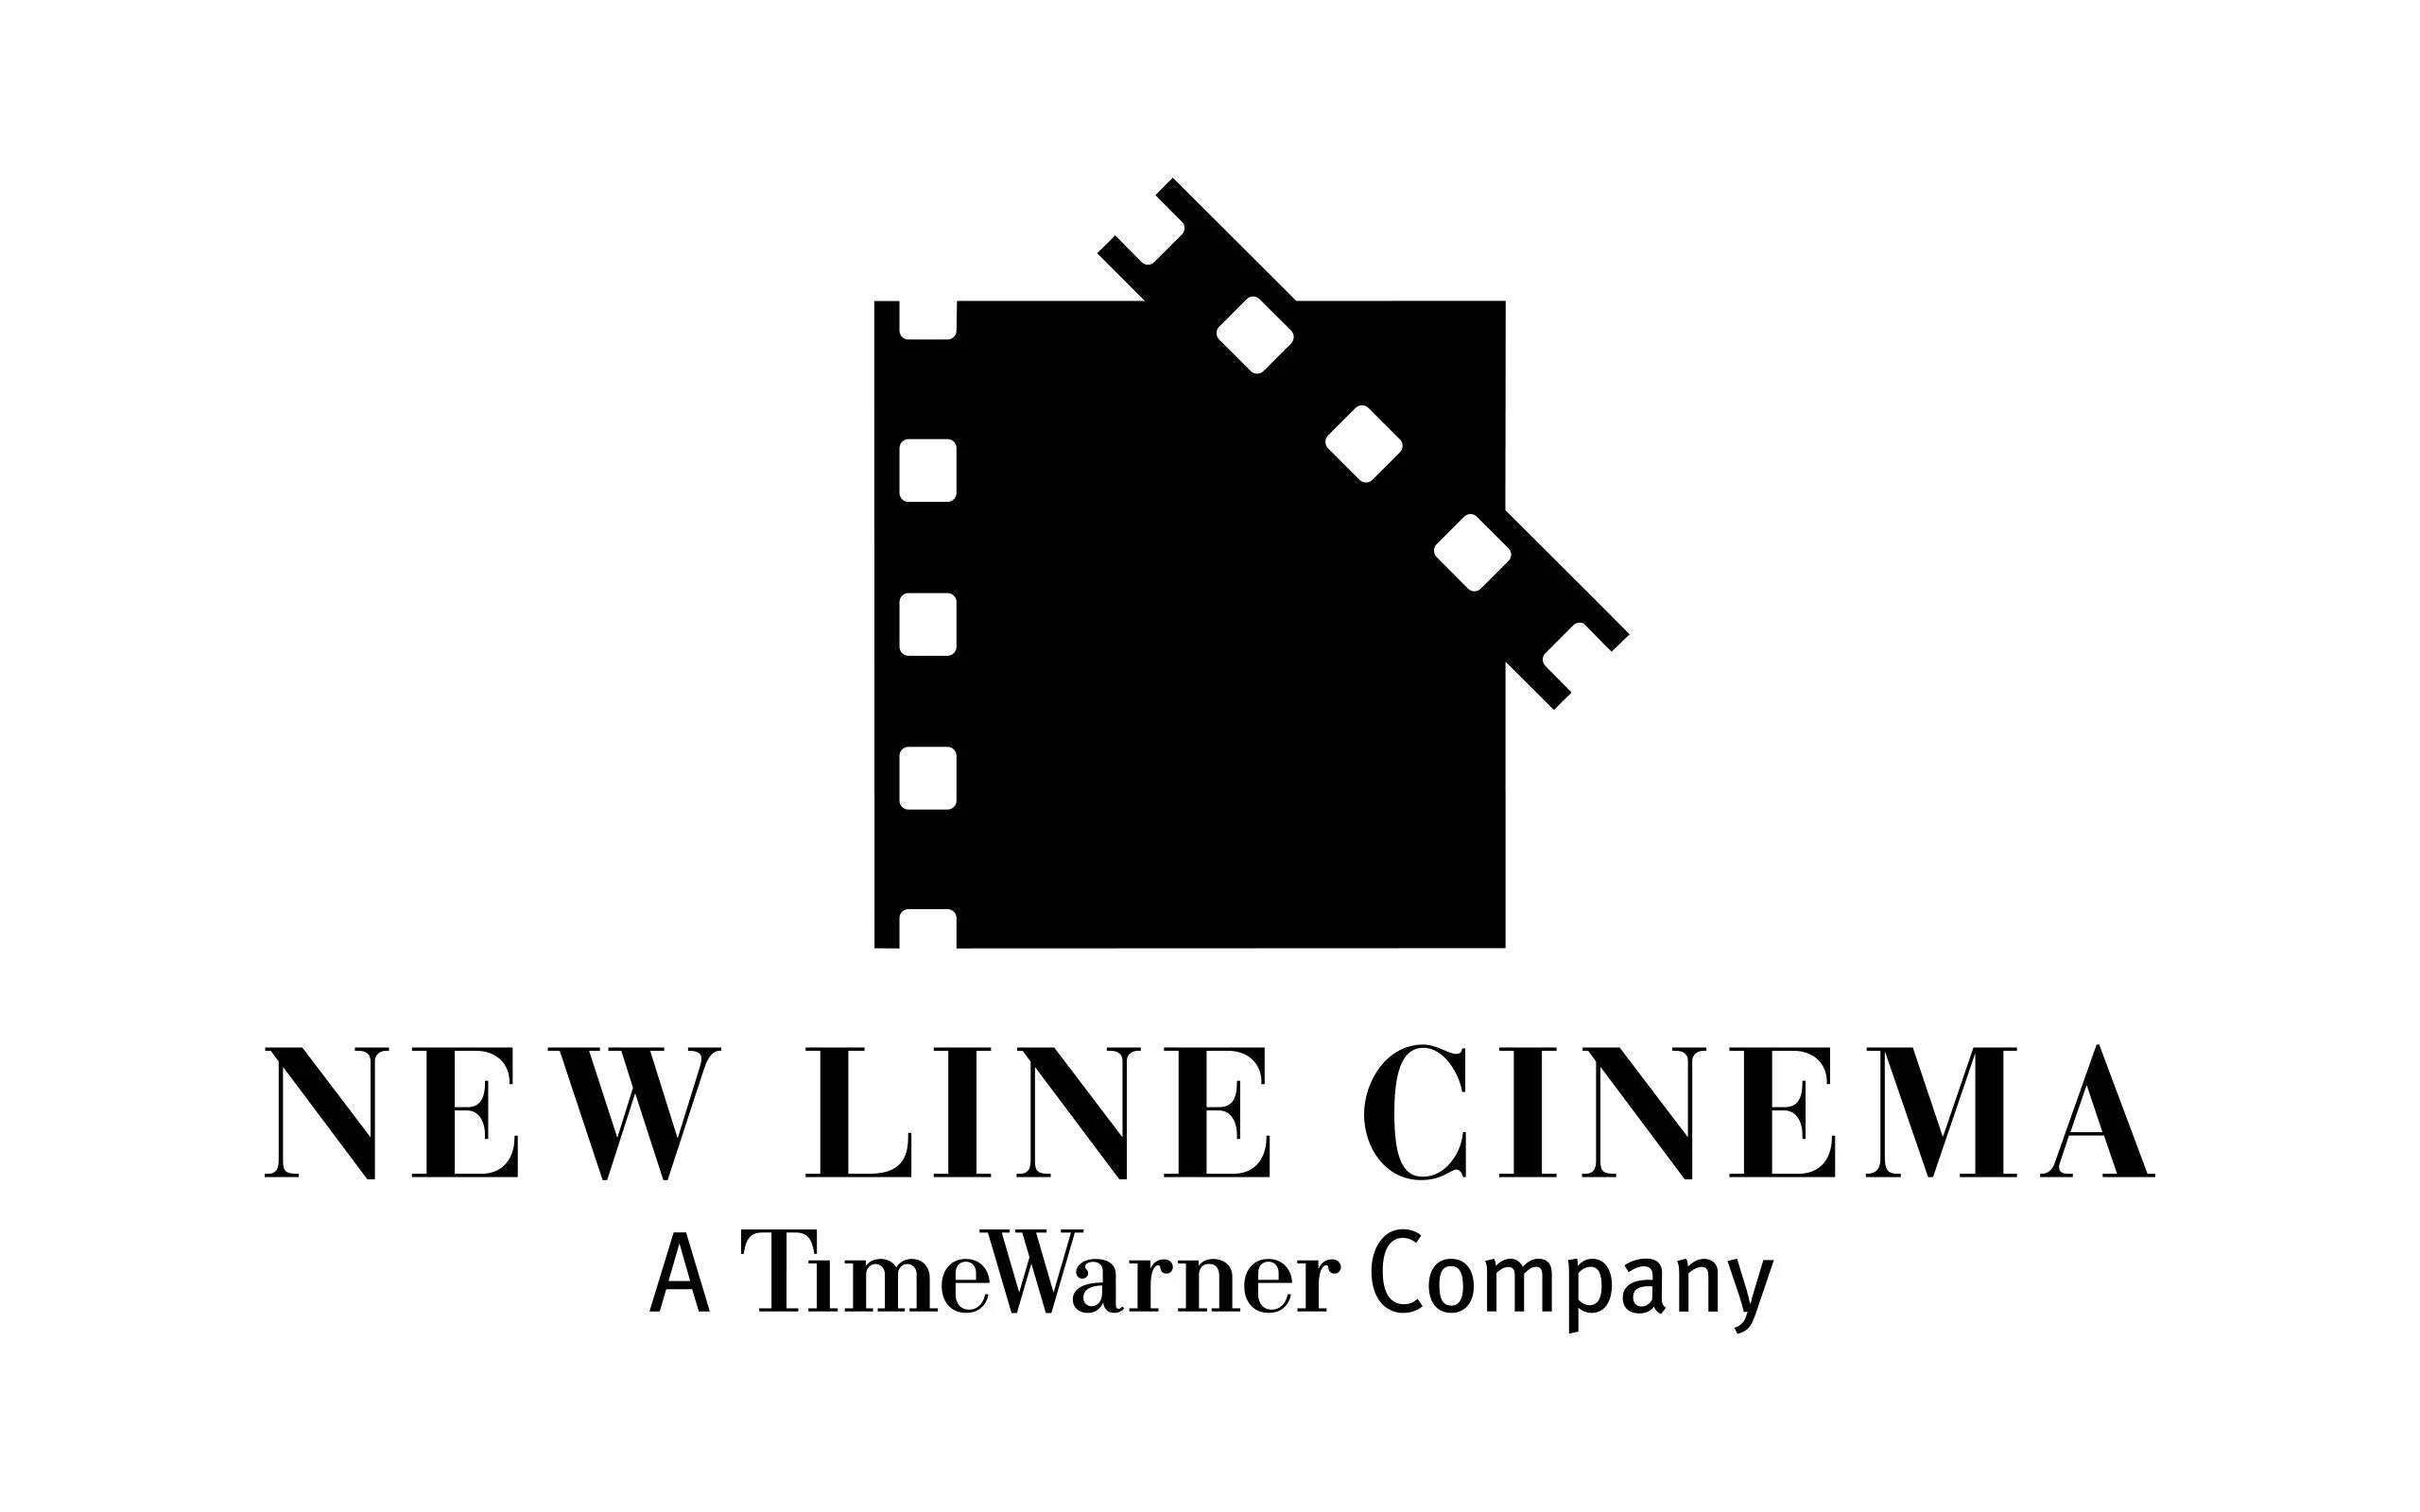 Нью лайн Синема. New line Cinema логотип. Логотипы киностудий. Логотипы известных кинокомпаний. New line 3